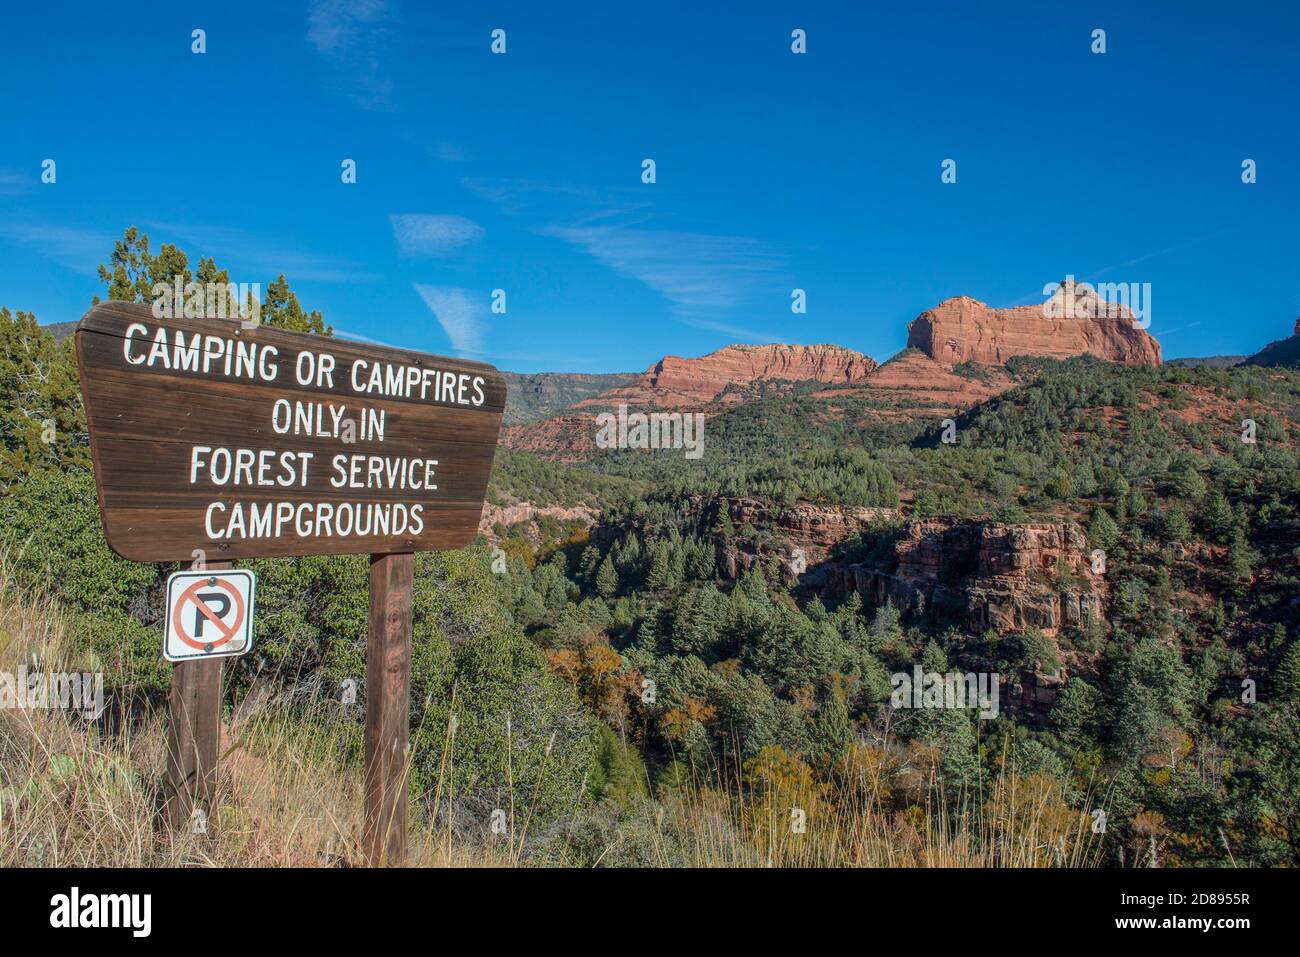 USA, ARIZONA,SEDONA, Sign with camping restrictions in the mountains near Sedona Stock Photo